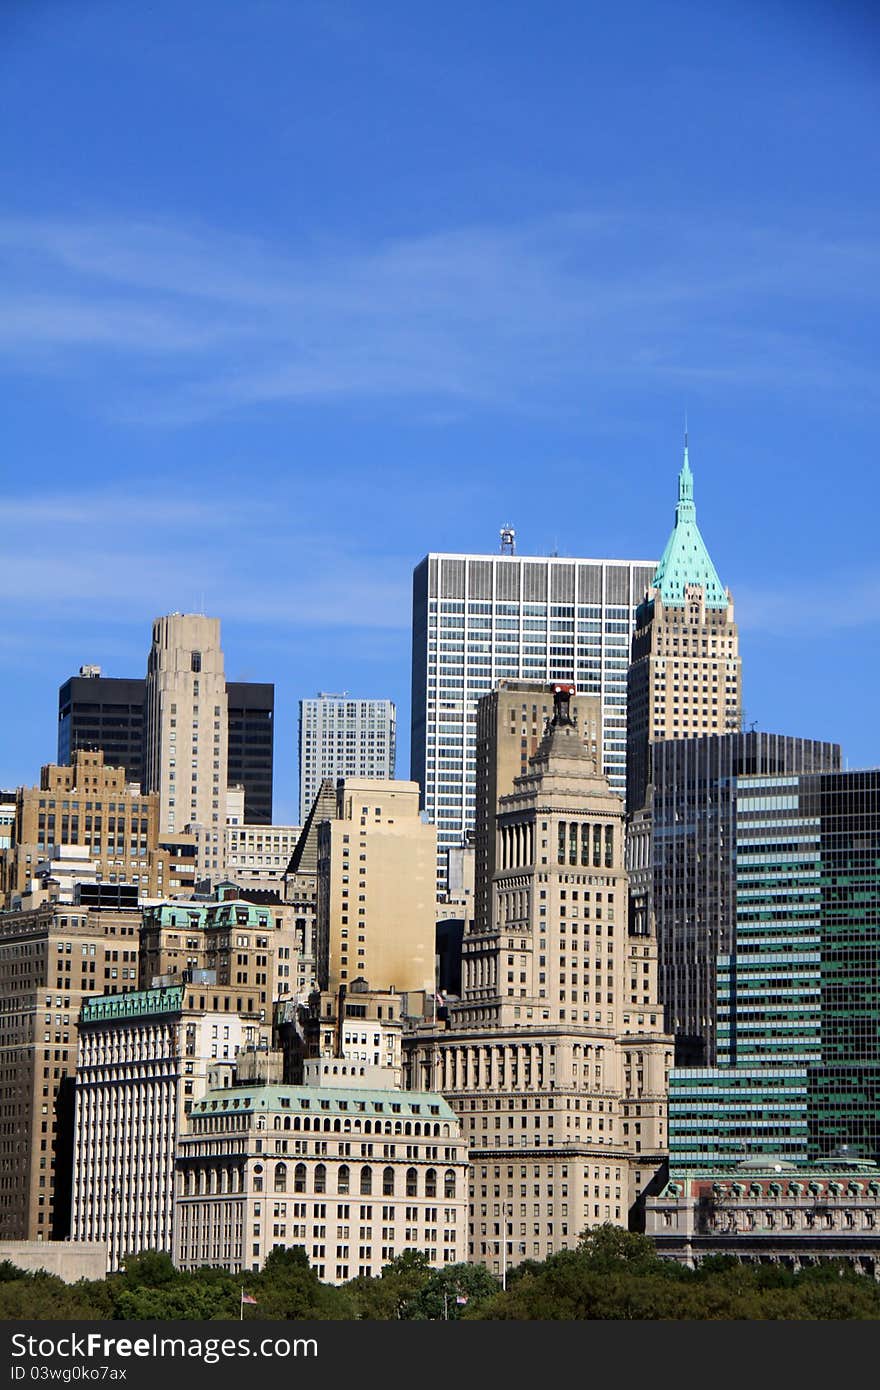 A view of Lower Manhattan